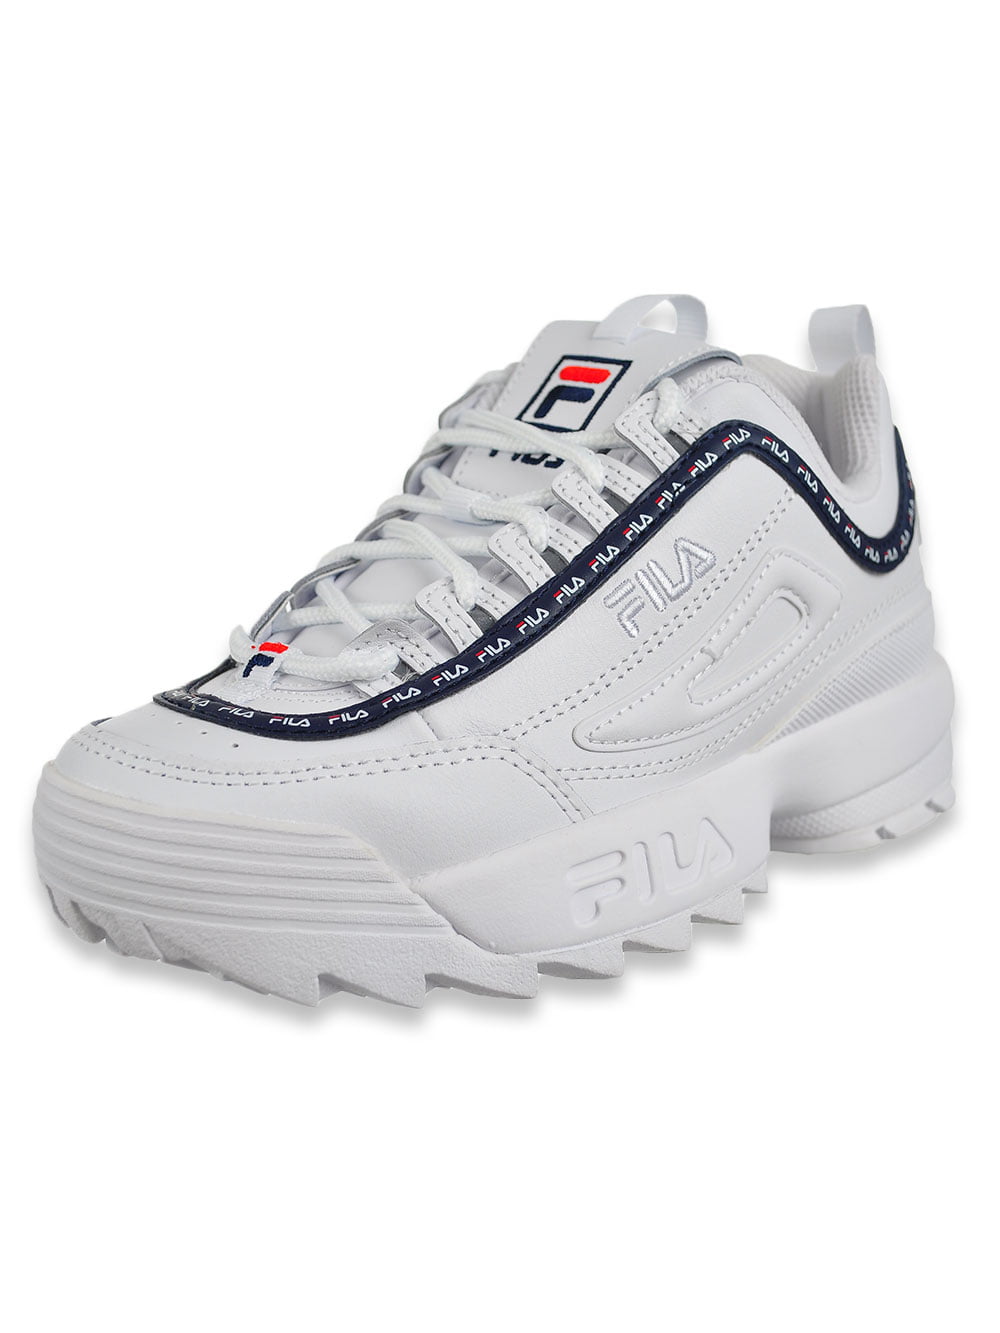 Krachtig klem motor Fila Boys' Disruptor II Repeat Sneakers (Sizes 12 - 3) - white/navy/red, 7  youth - Walmart.com